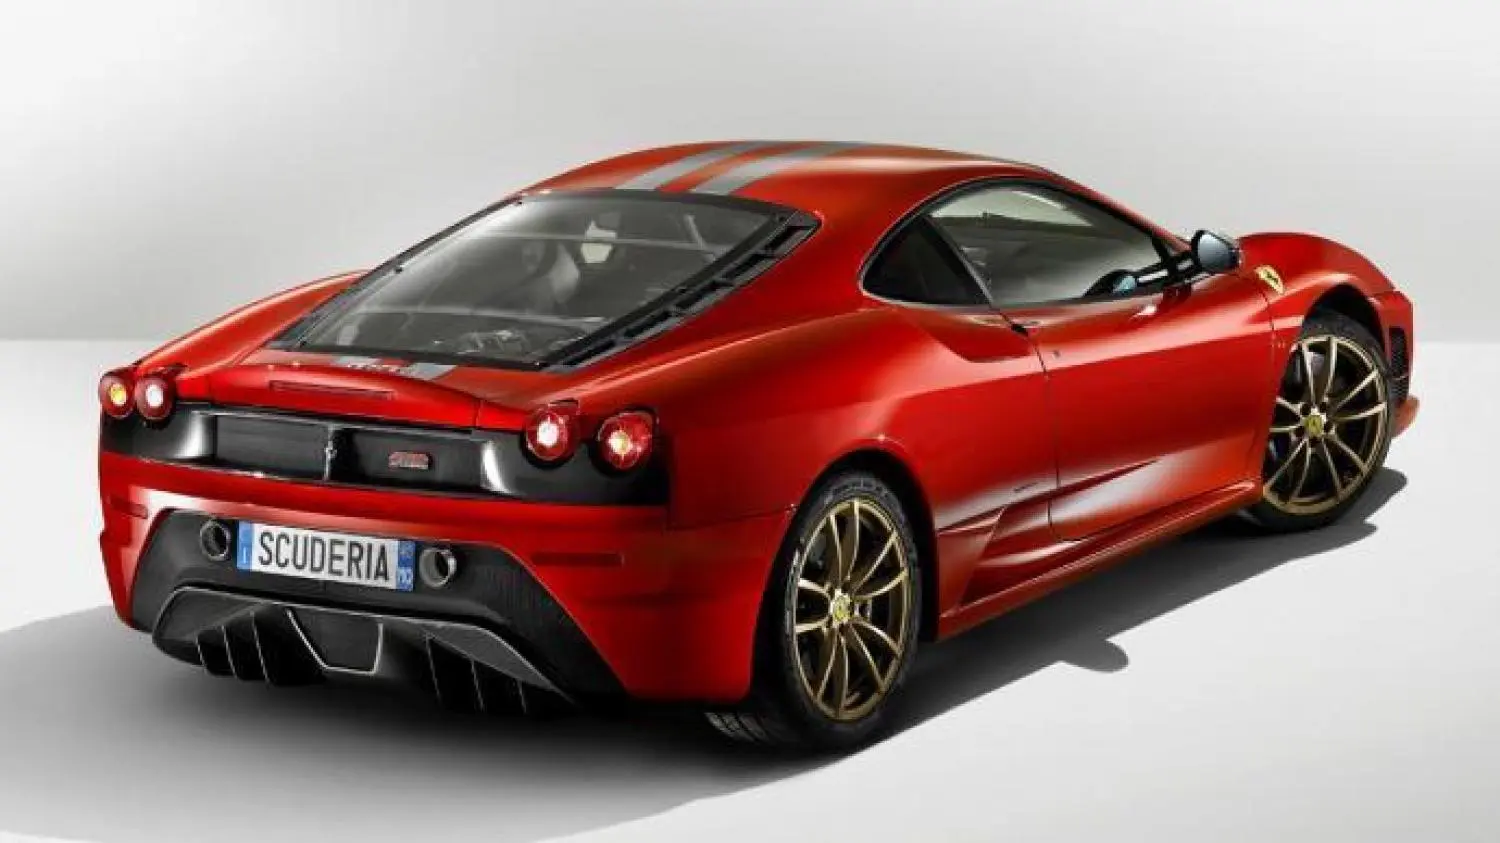 ferrari f430 horsepower - How fast is a Ferrari F430